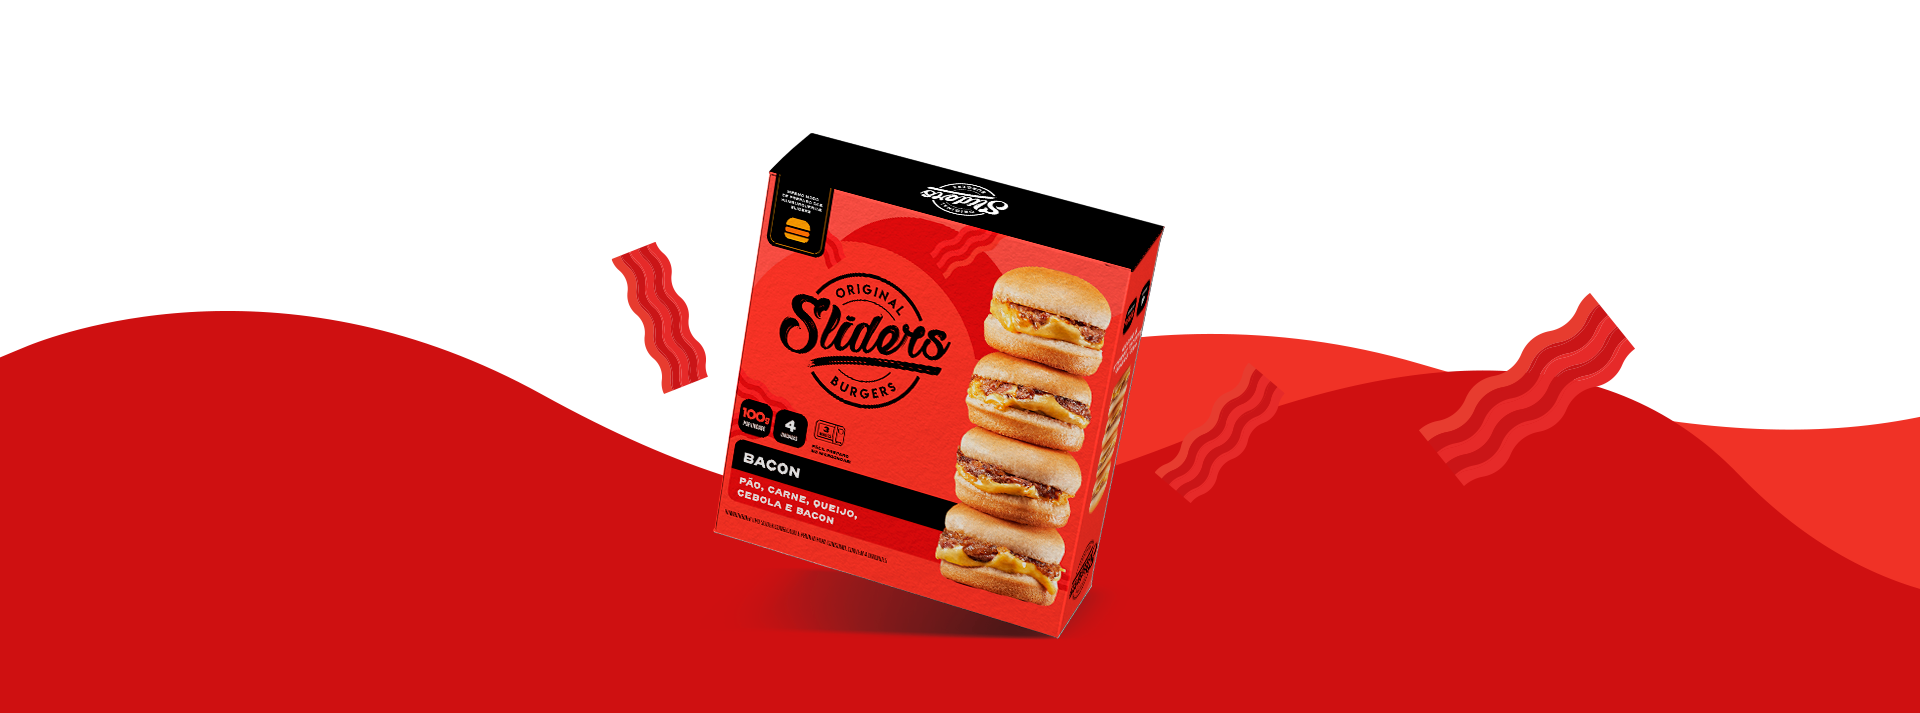 embalagens de sliders sabor bacon